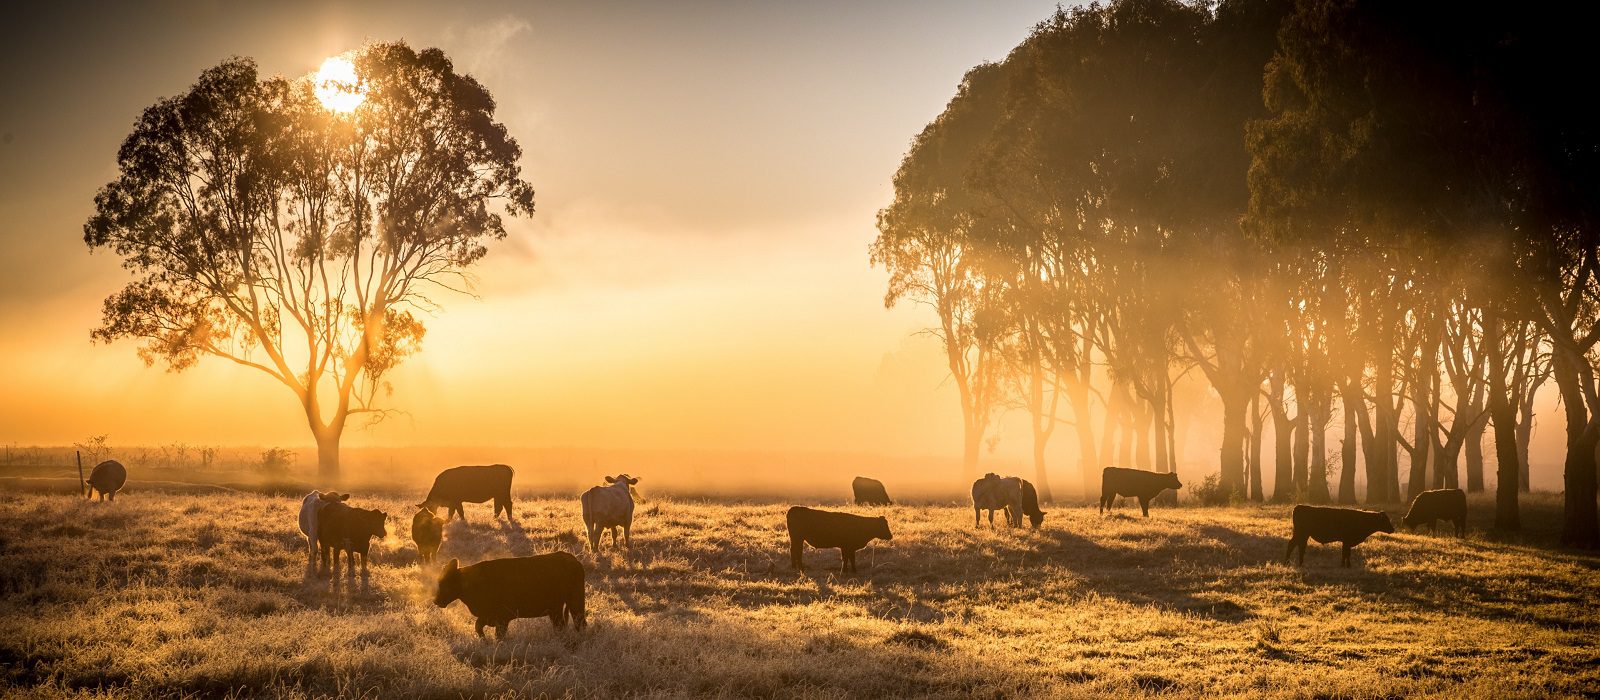 agriculture-farming-australia